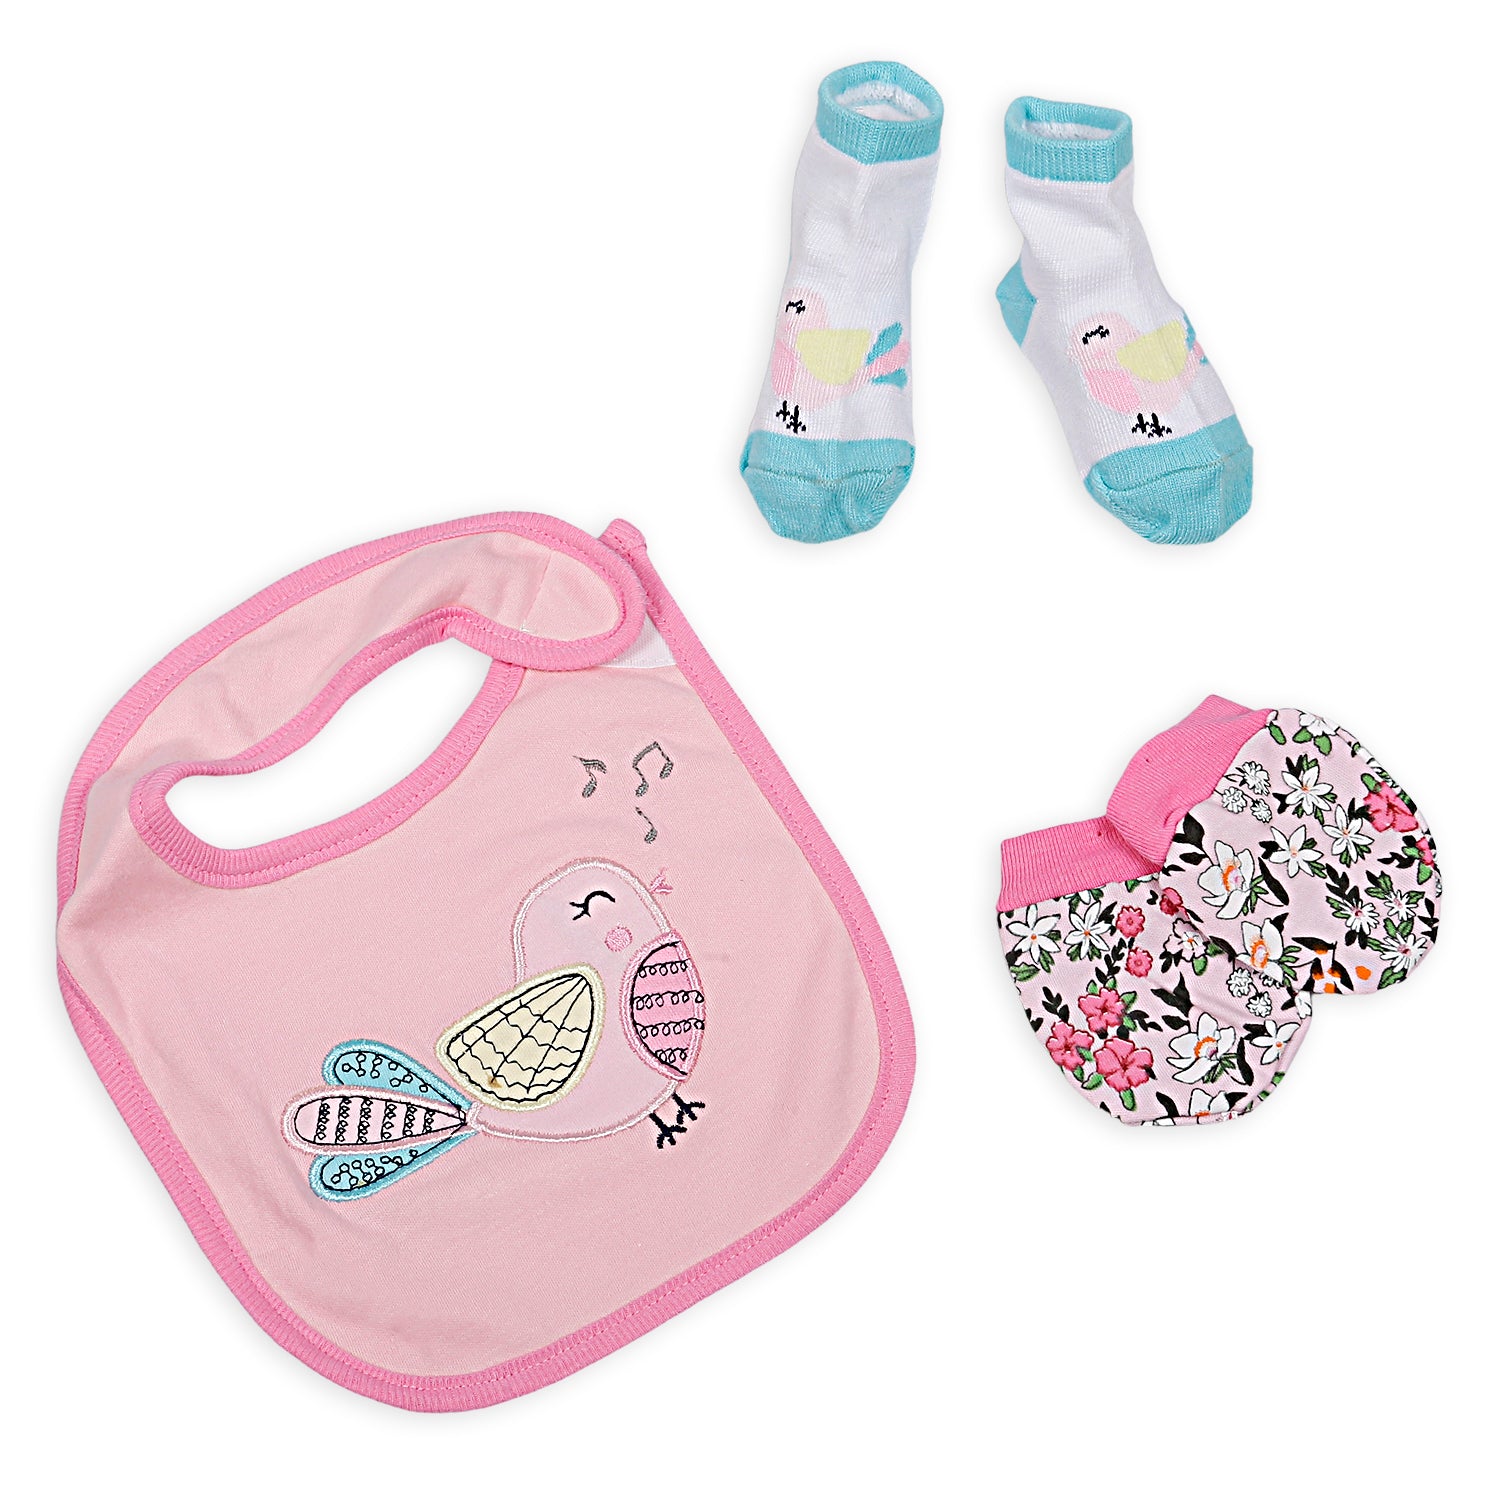 Feeding Bibs Socks And Mittens Set Of 3 Nightingale Pink - Baby Moo